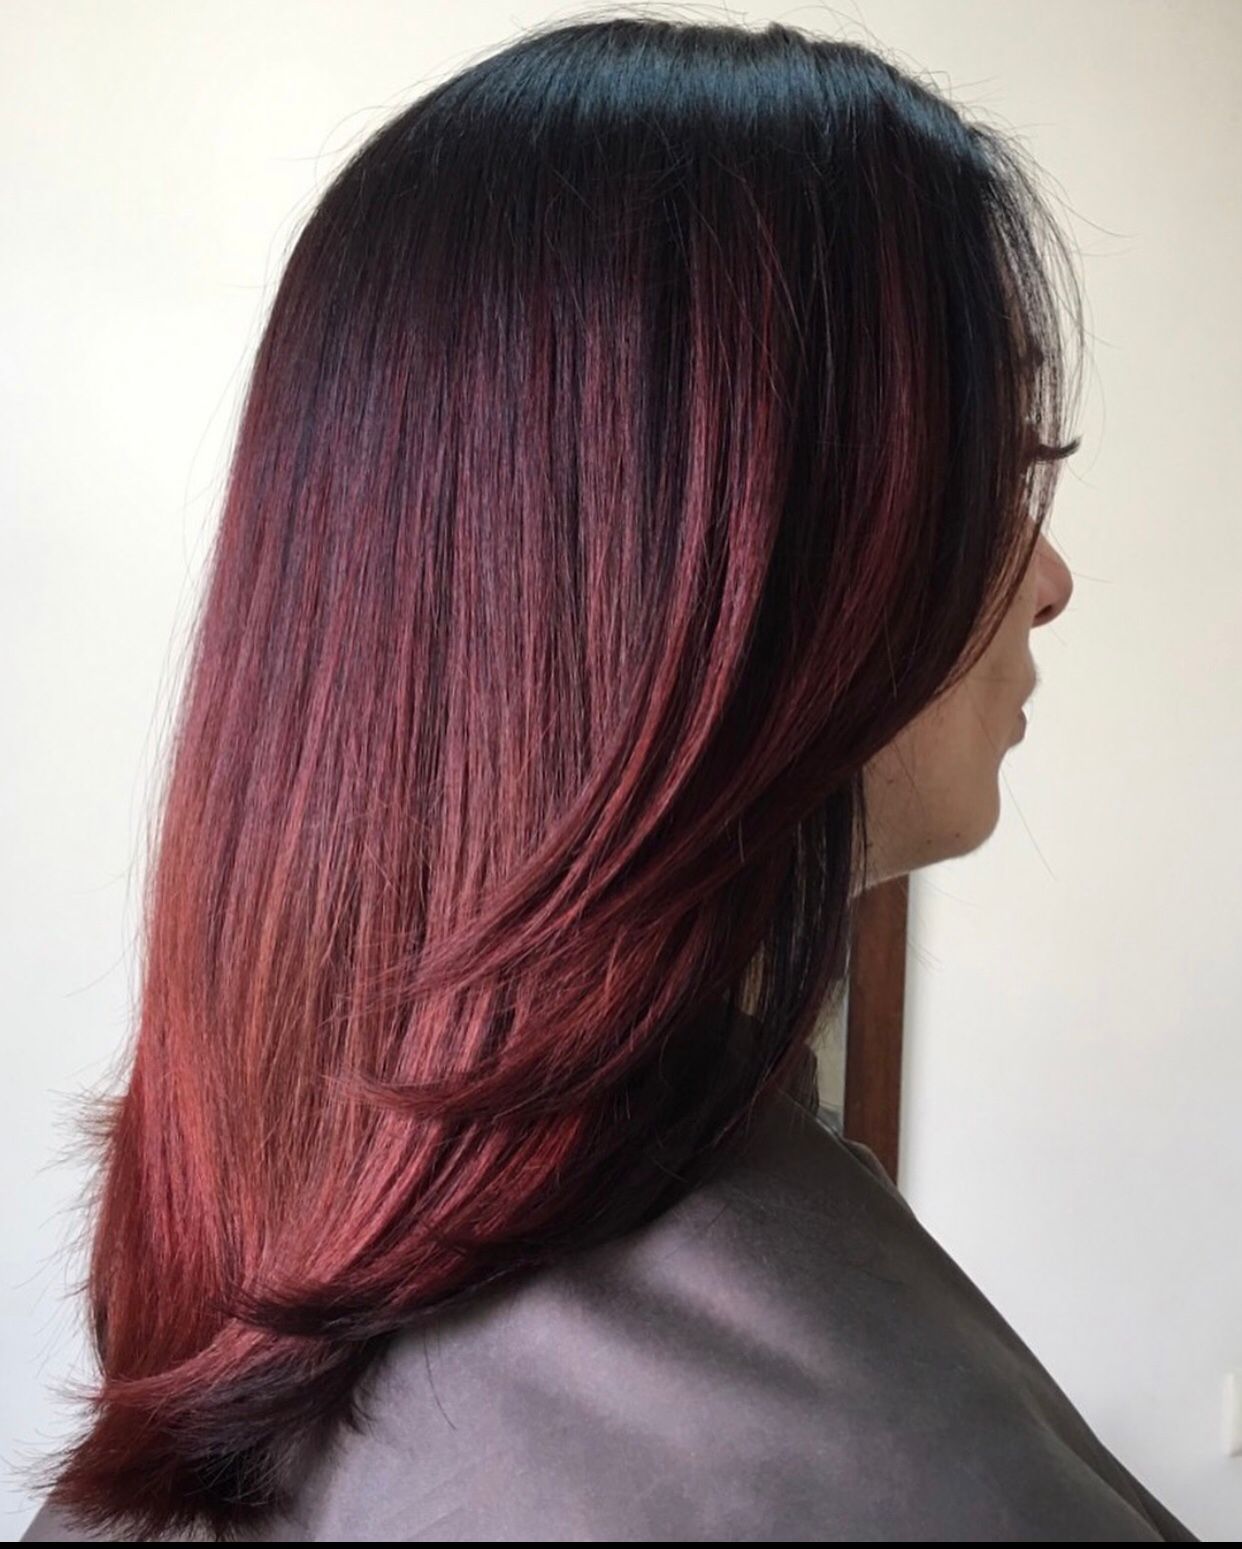 red hair colour top hastings hair salons